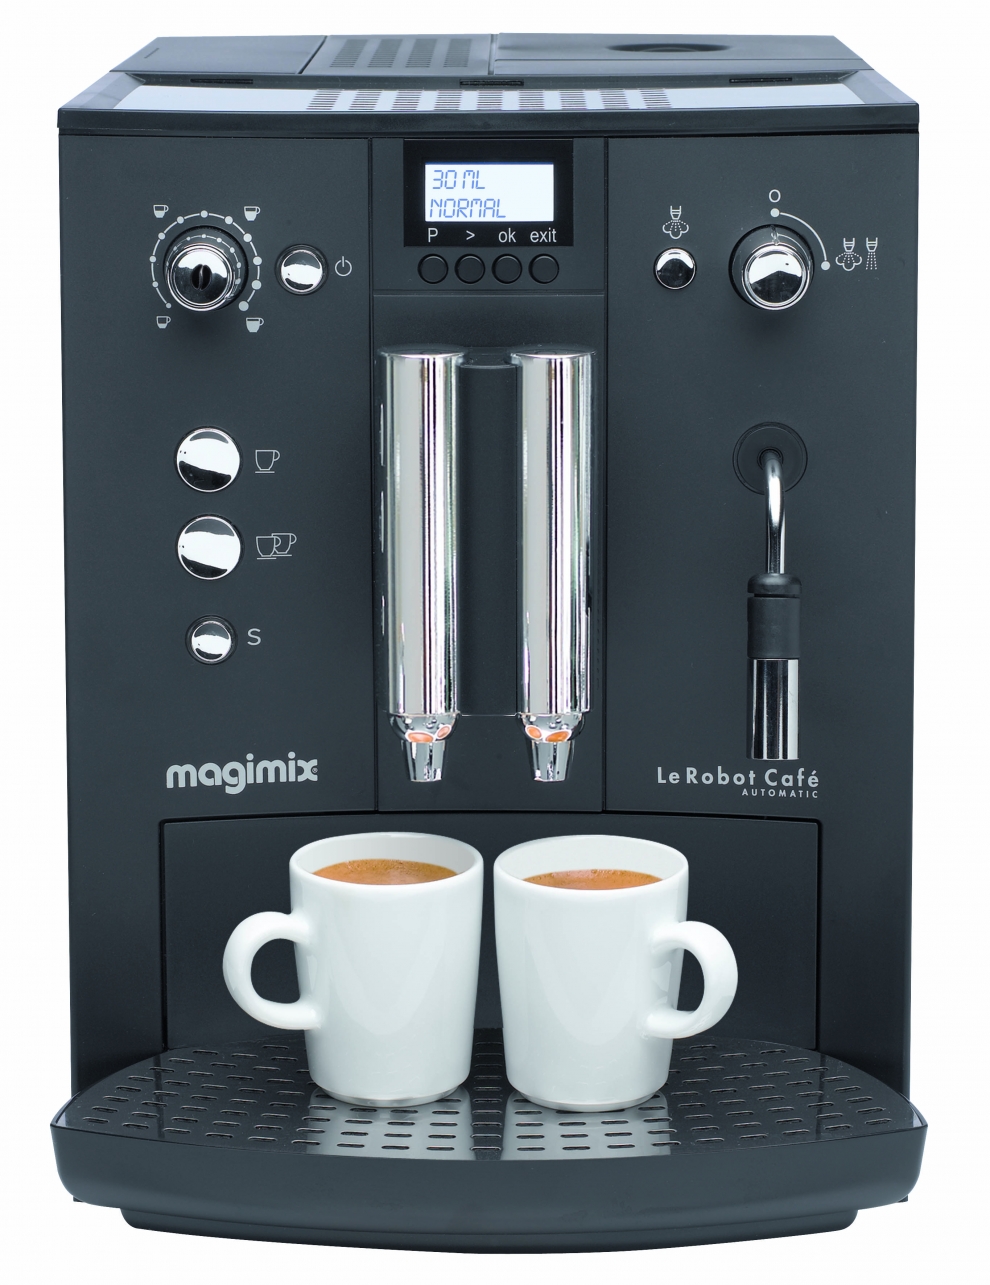 leeg cascade vieren Robot café Magimix 19 bars - 11490 - MAGIMIX | Francis BATT